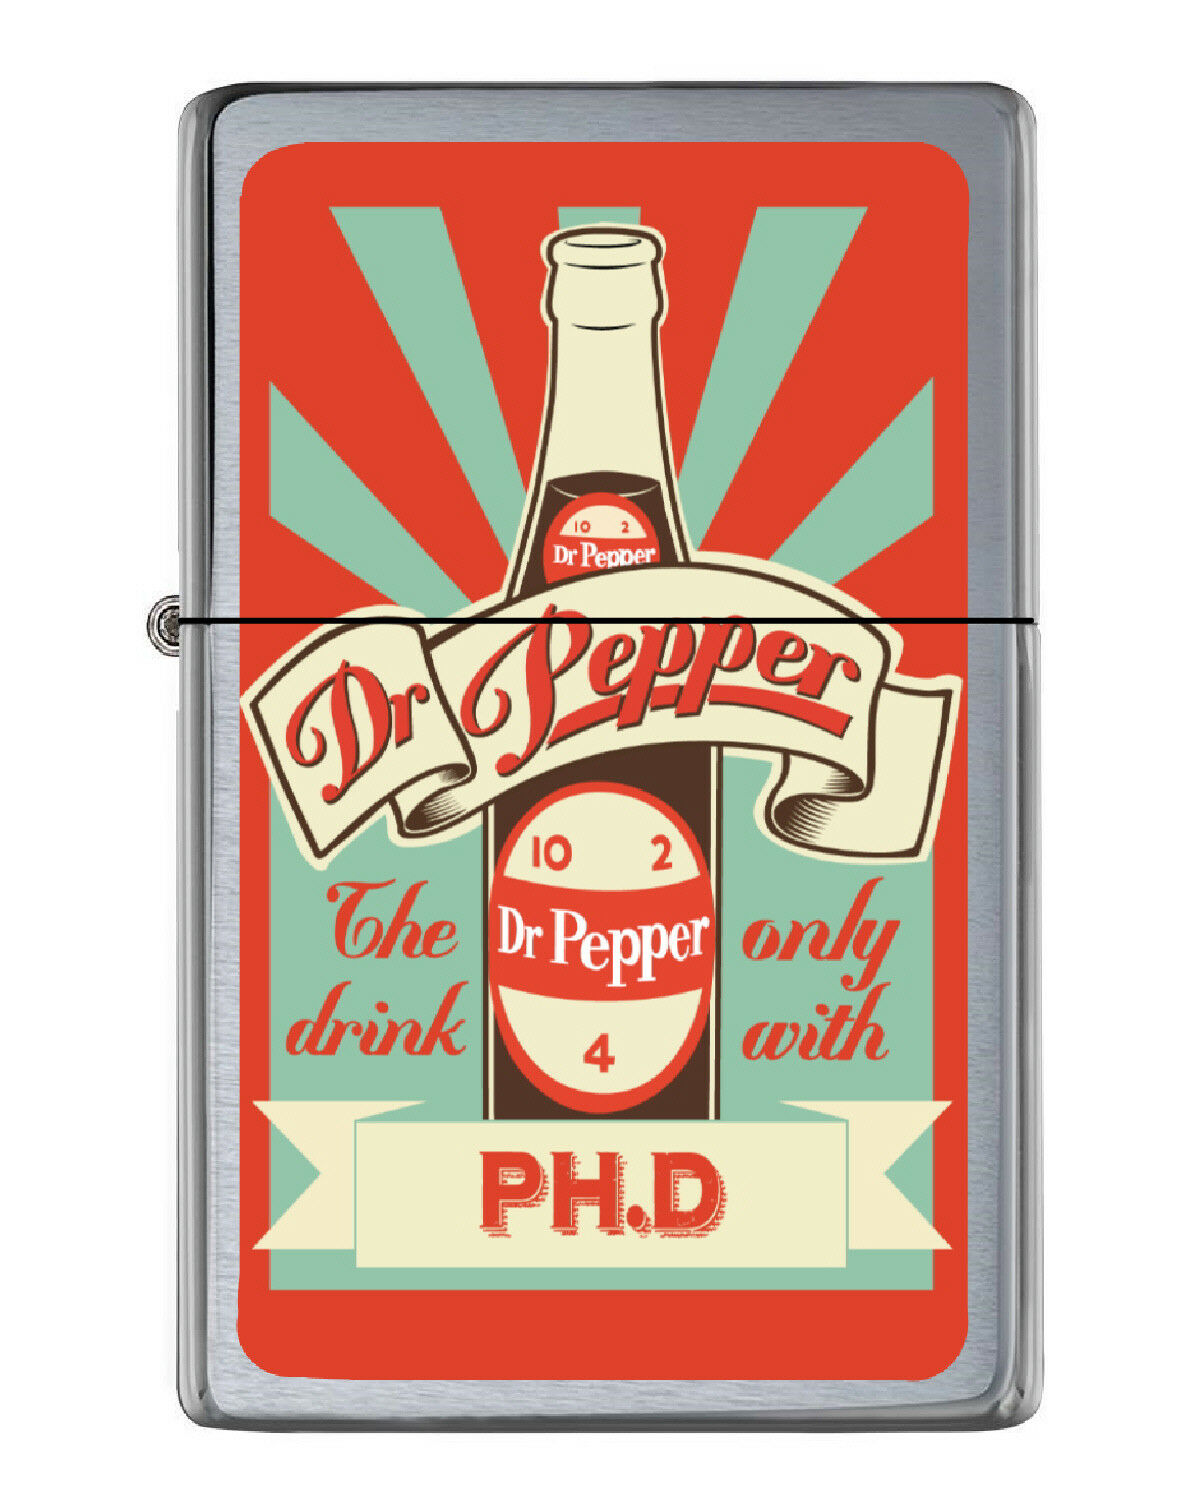 Retro Dr. Pepper Bottle Ad Flip Top Lighter Brushed Chrome with Vinyl Image.